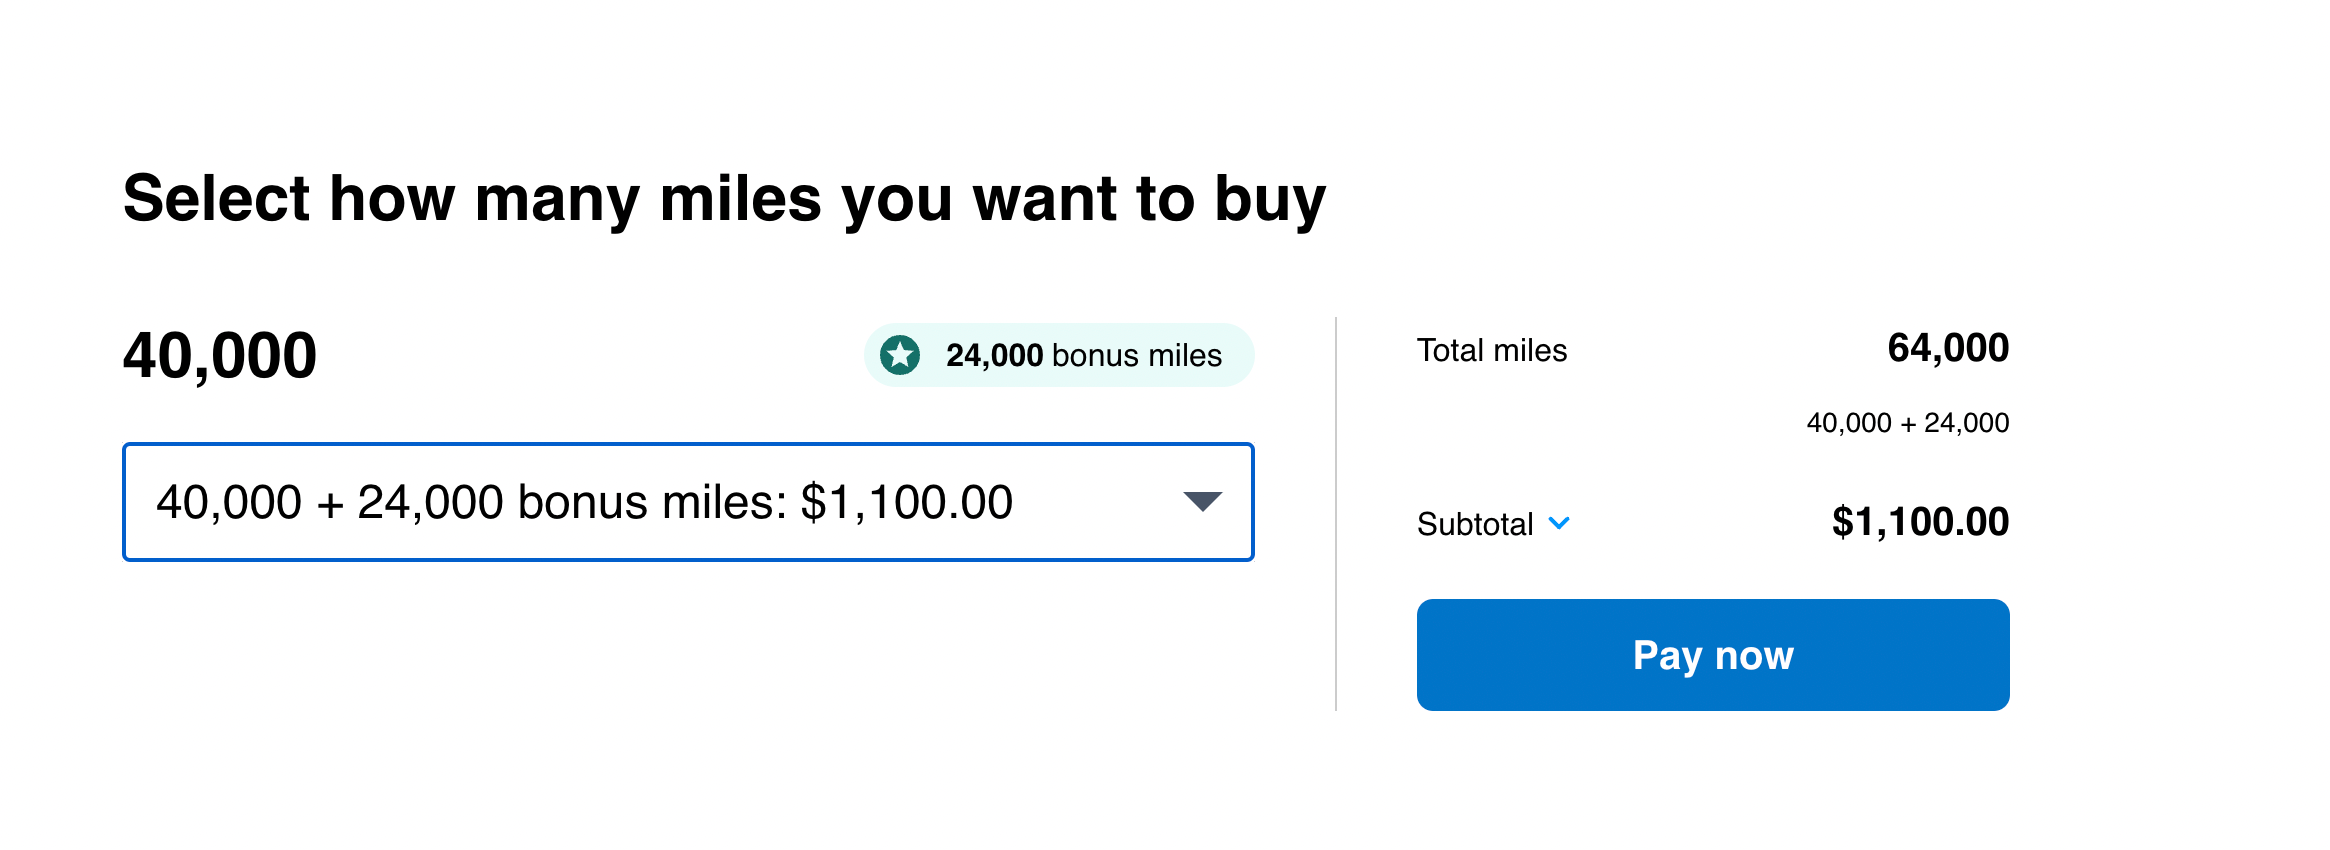 Purchasing Alaska Airlines bonus miles 